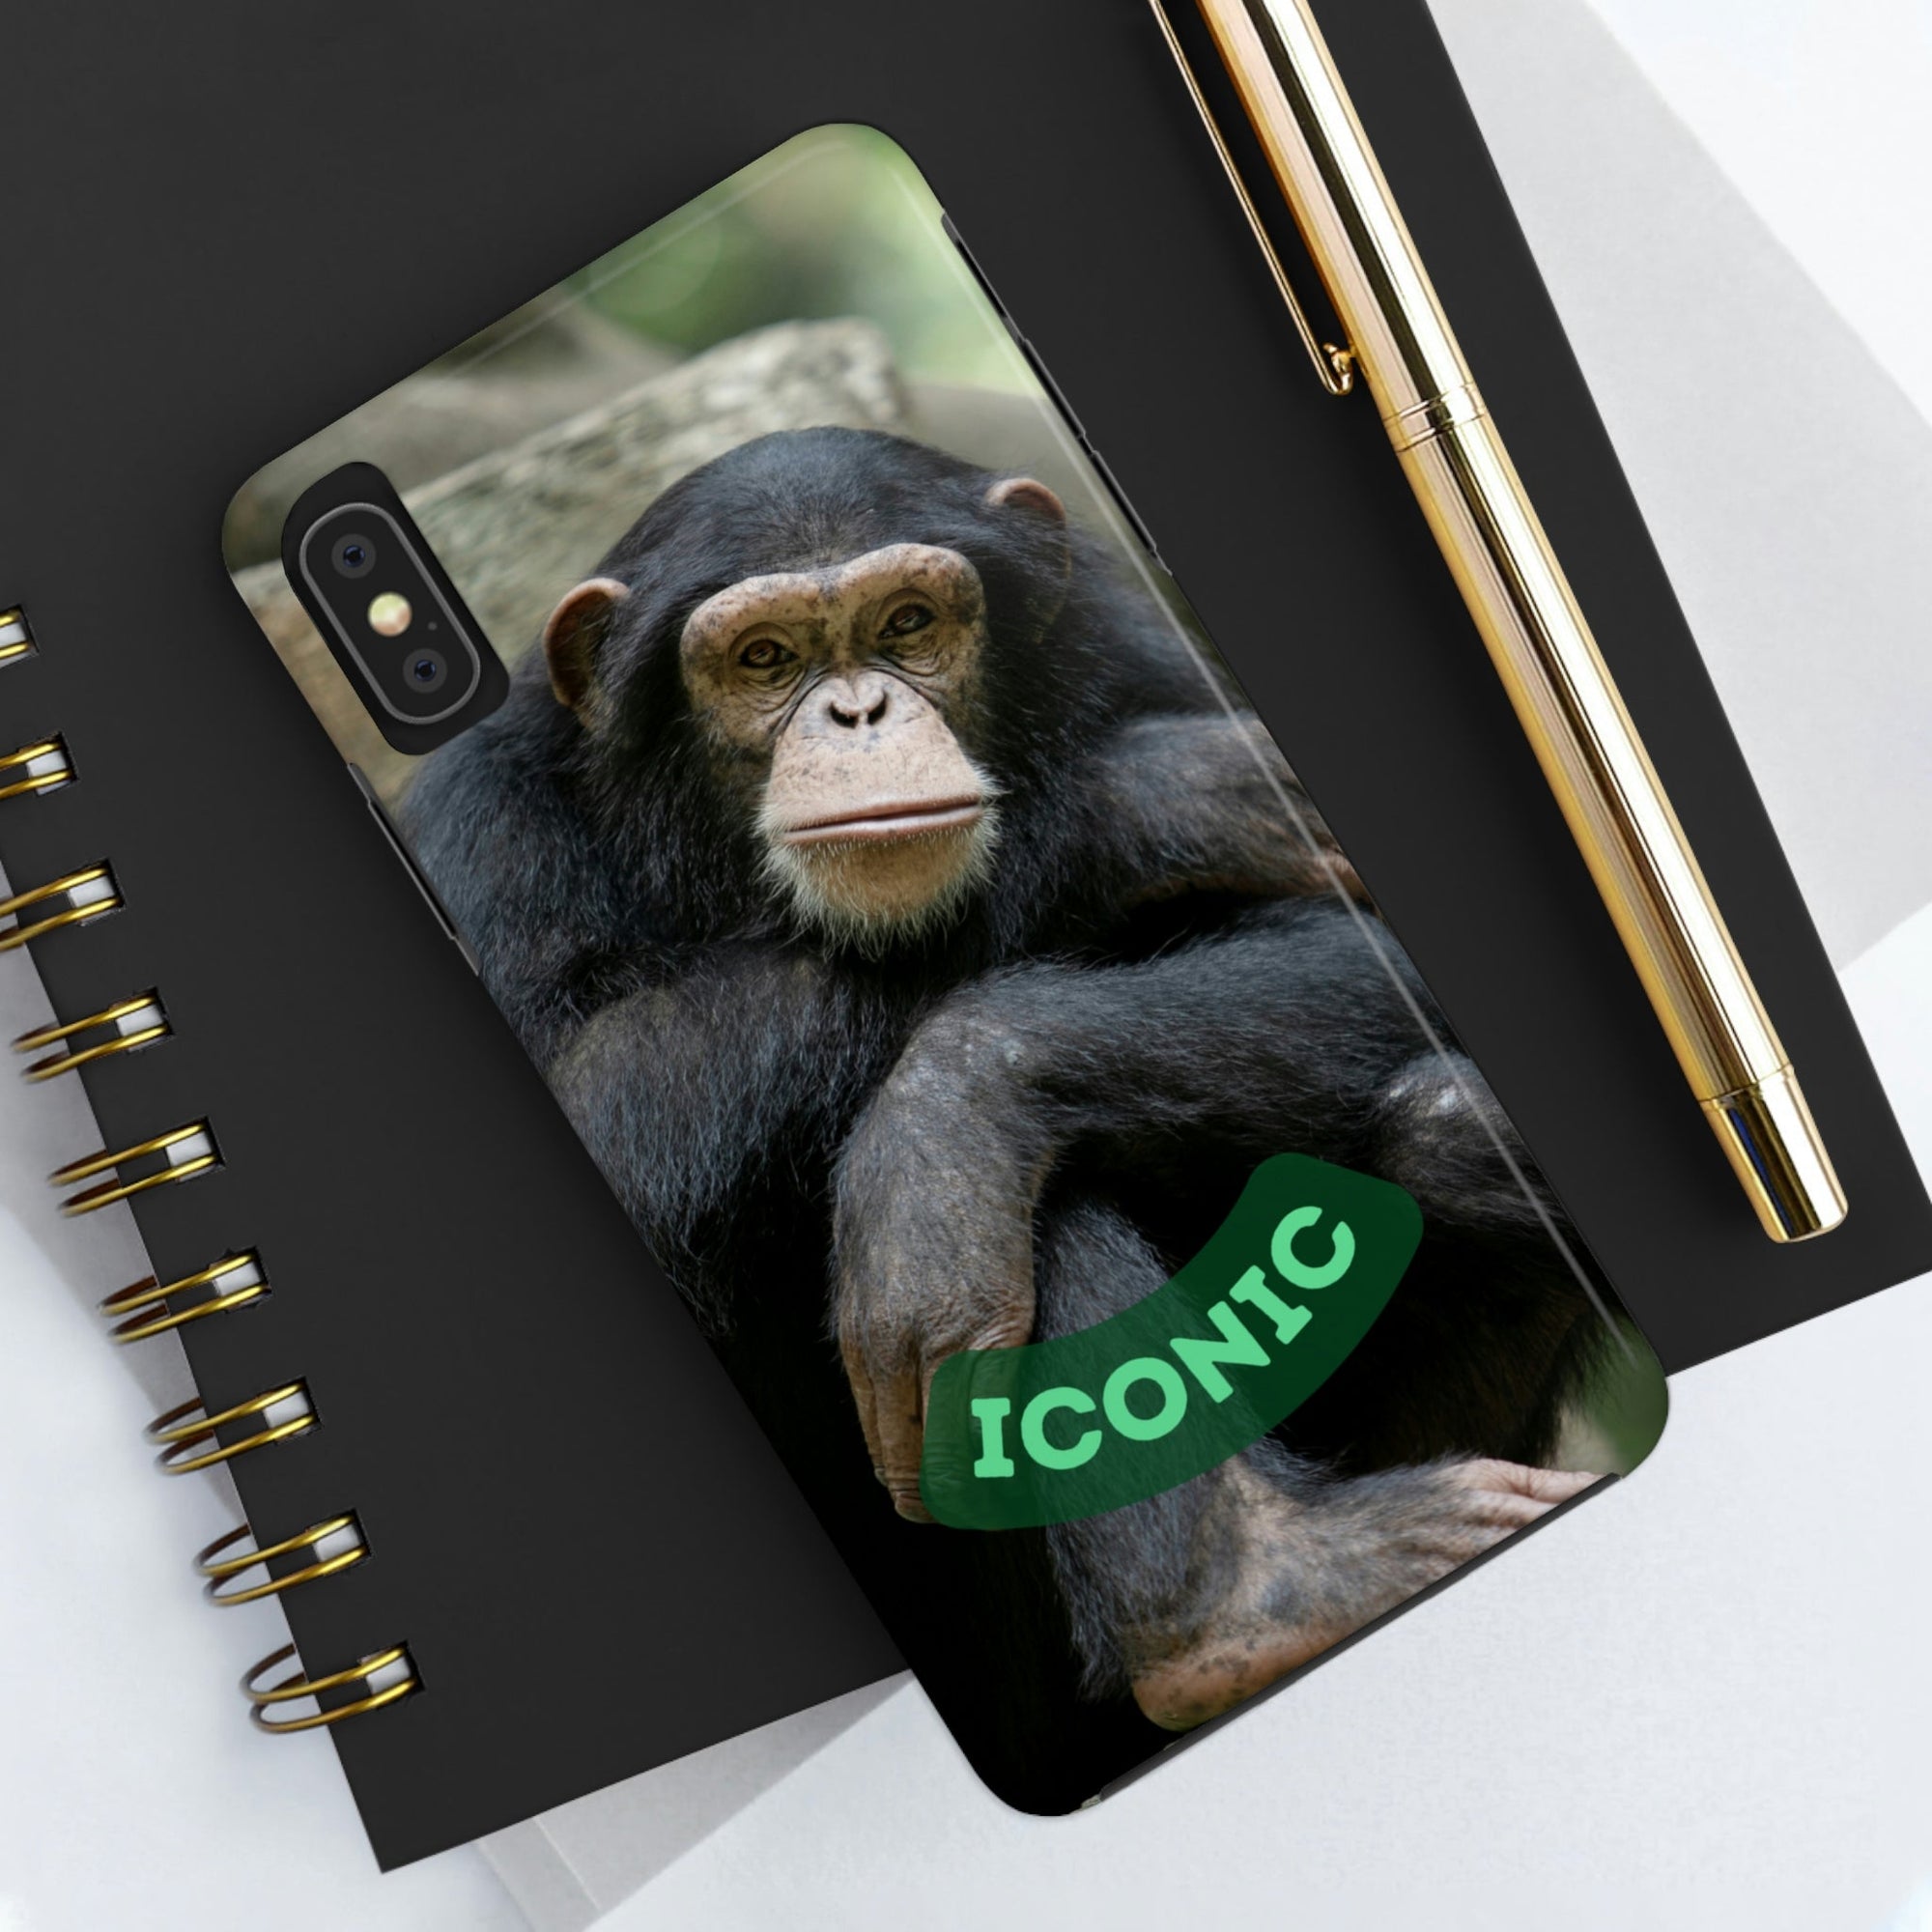 Tough Phone Cases, Case-Mate Iconic Chimpanzee - Primation